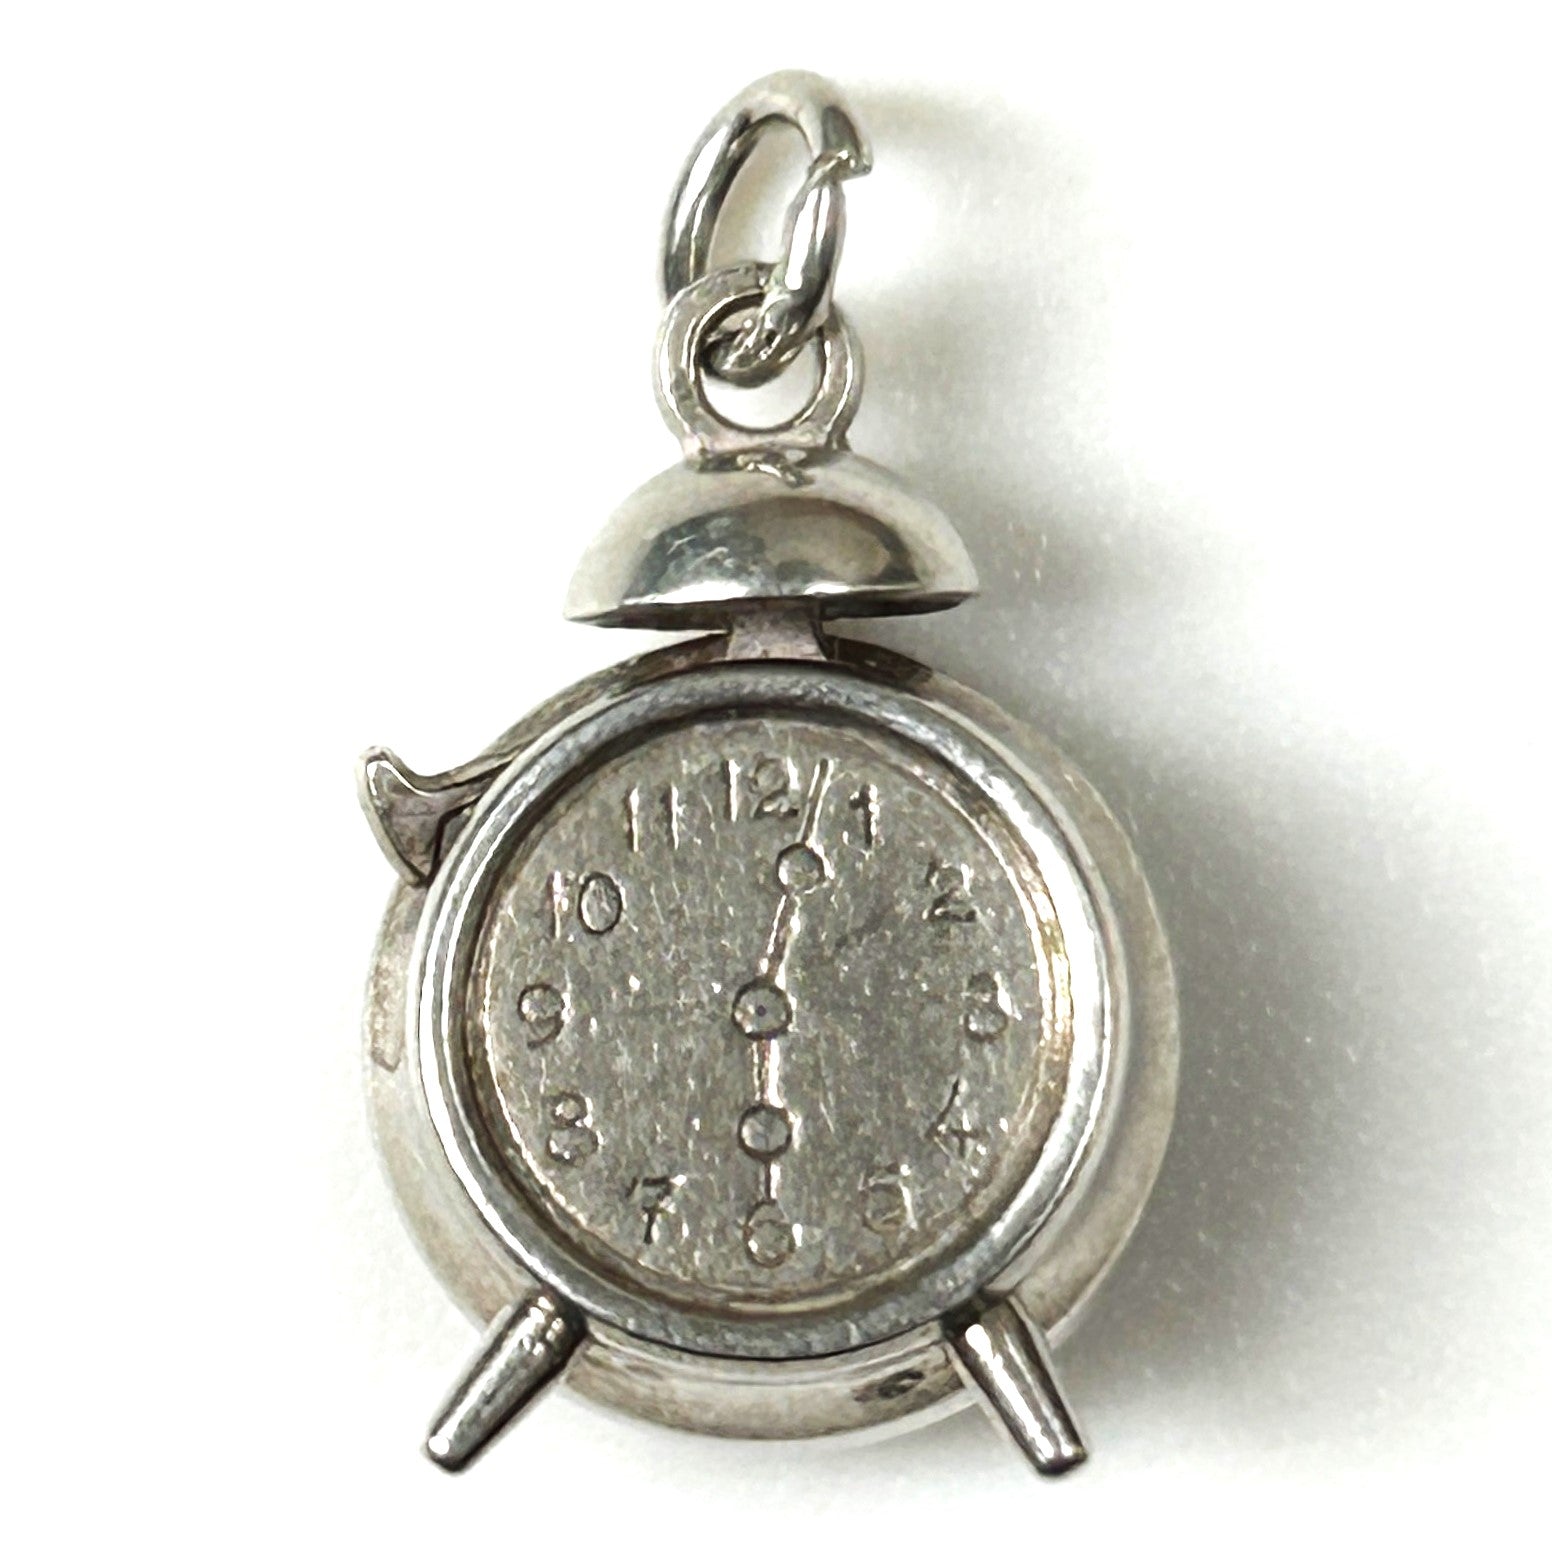 Miniature Silver “Alarm Clock” Charm Pendant